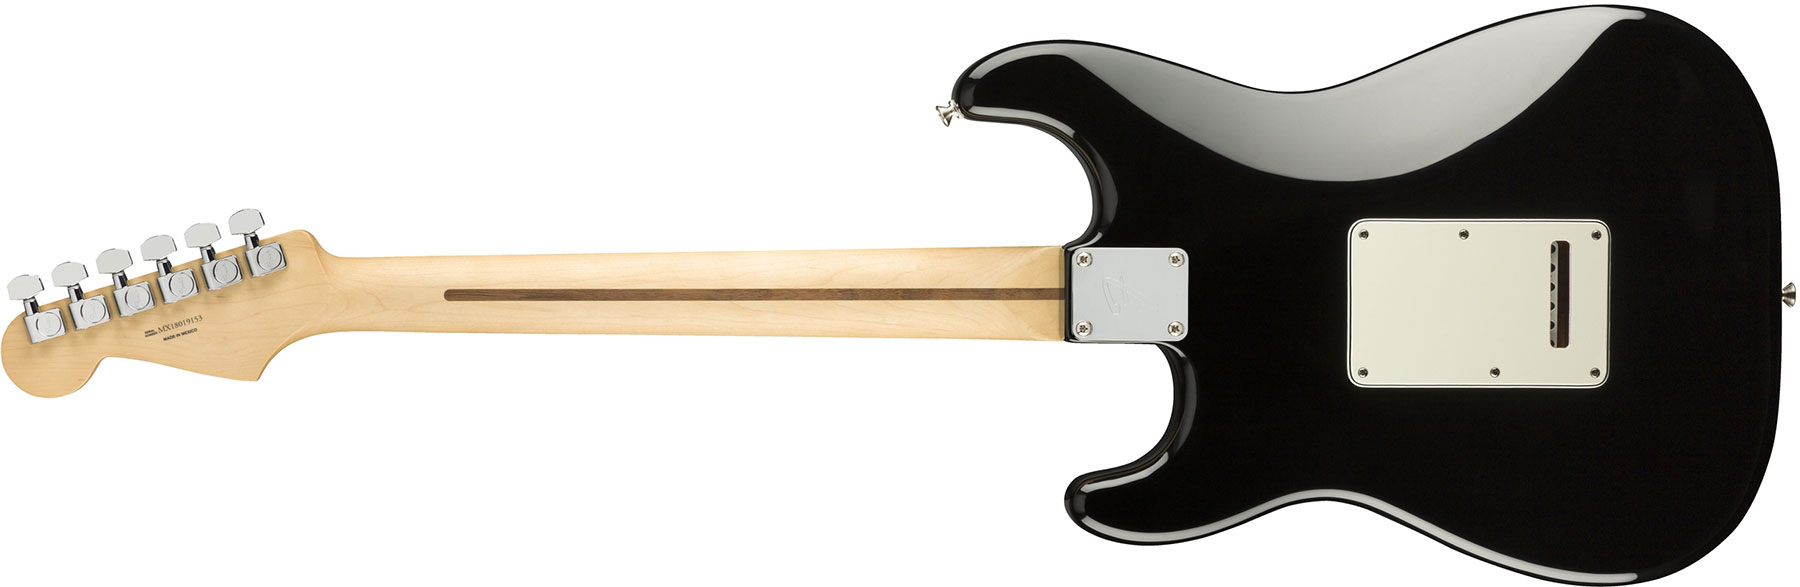 Fender Strat Player Mex Hss Pf - Black - Str shape electric guitar - Variation 1